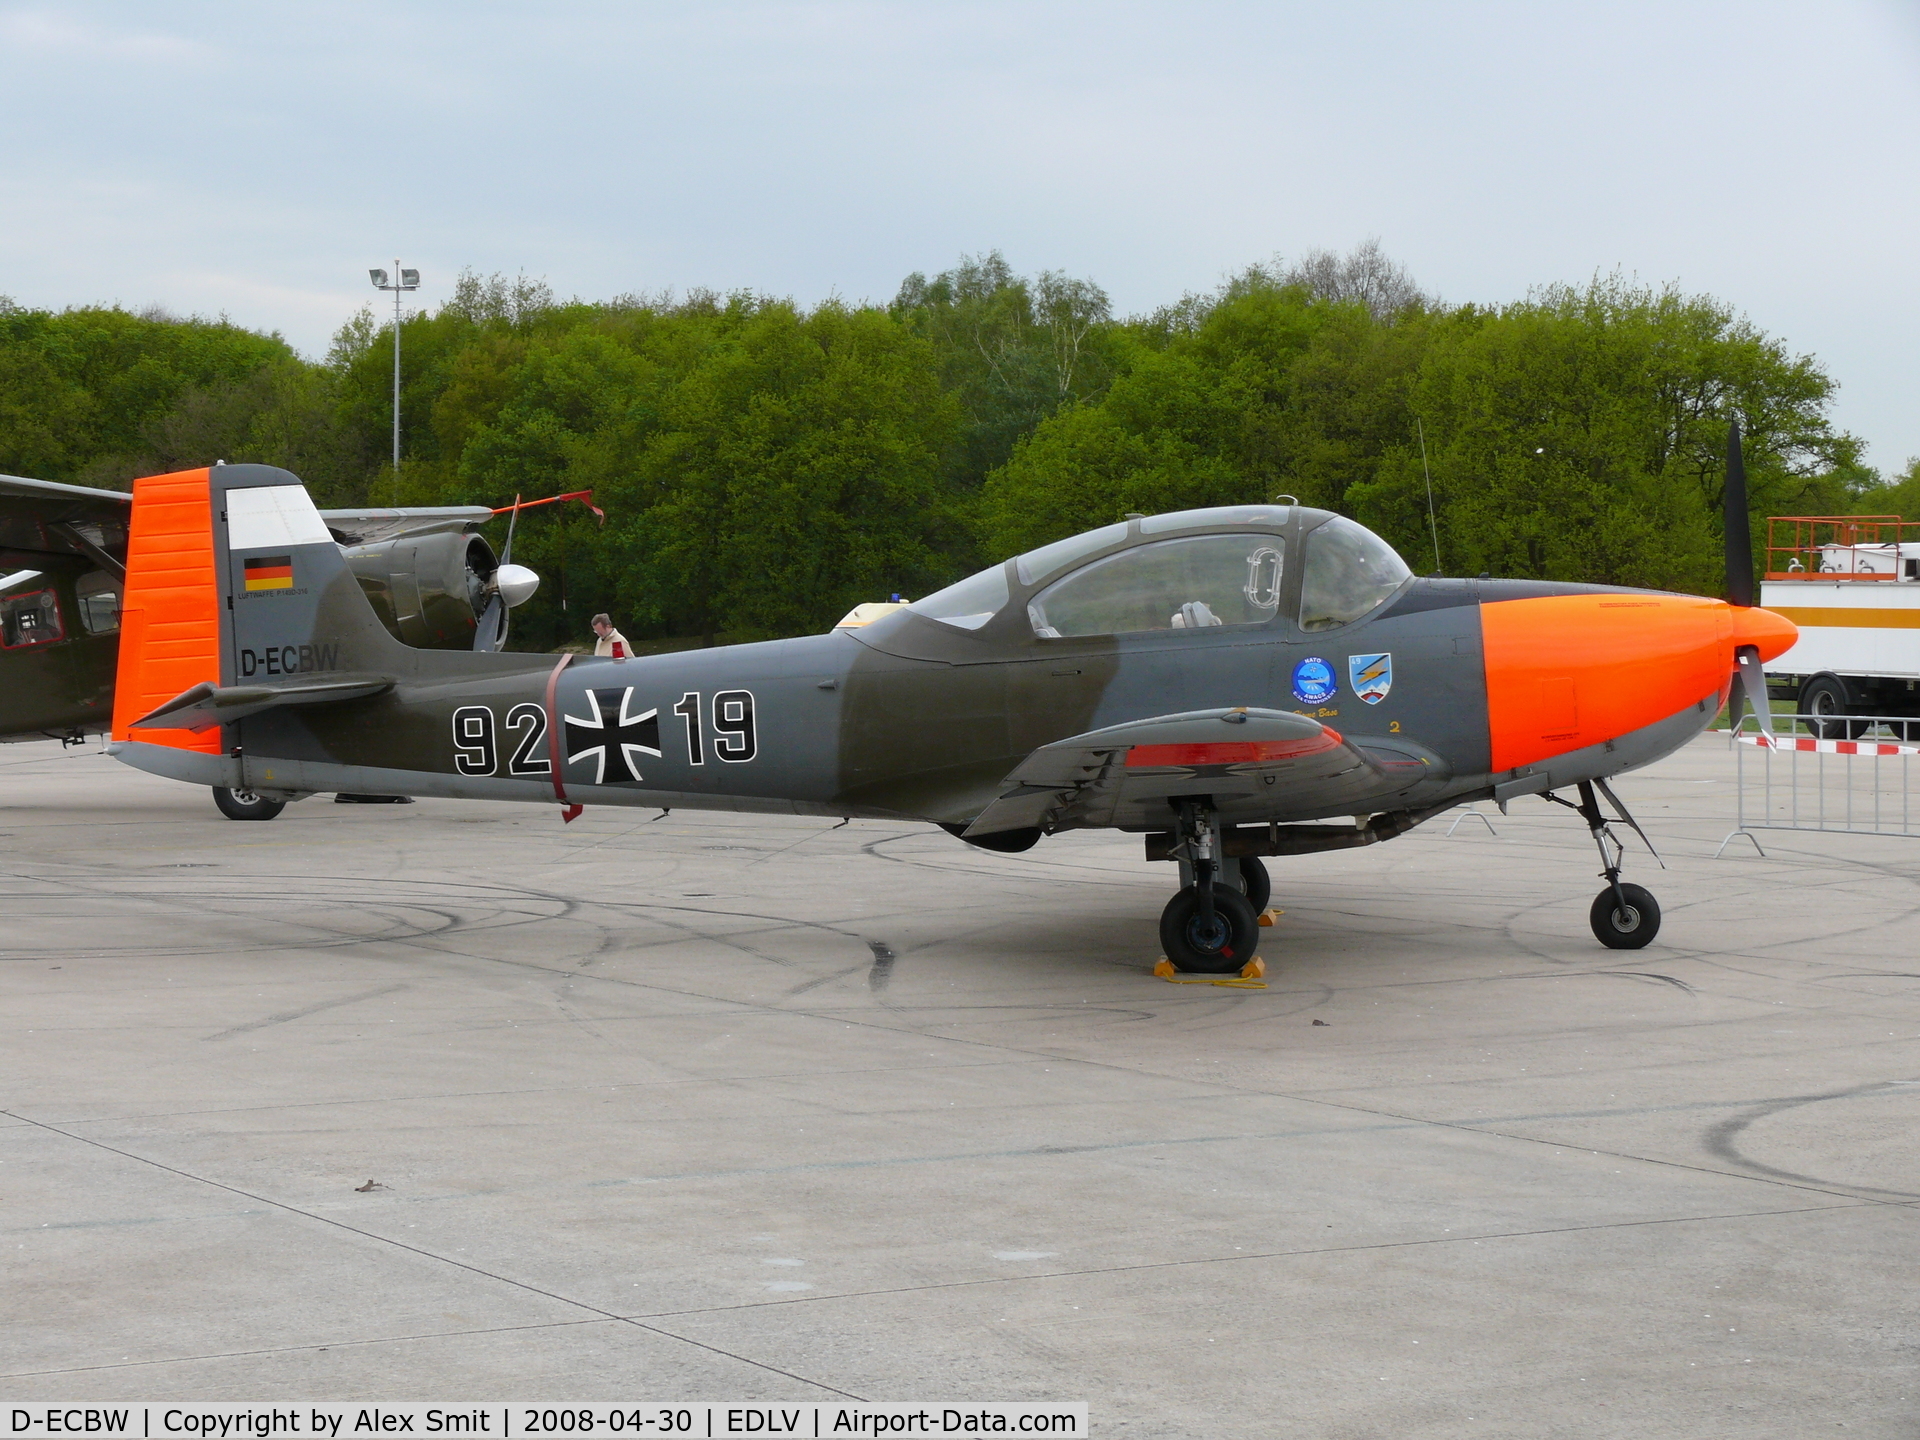 D-ECBW, 1958 Focke-Wulf FWP-149D C/N 316, Piaggio FWP-149D D-ECBW as German Air Force 92+19